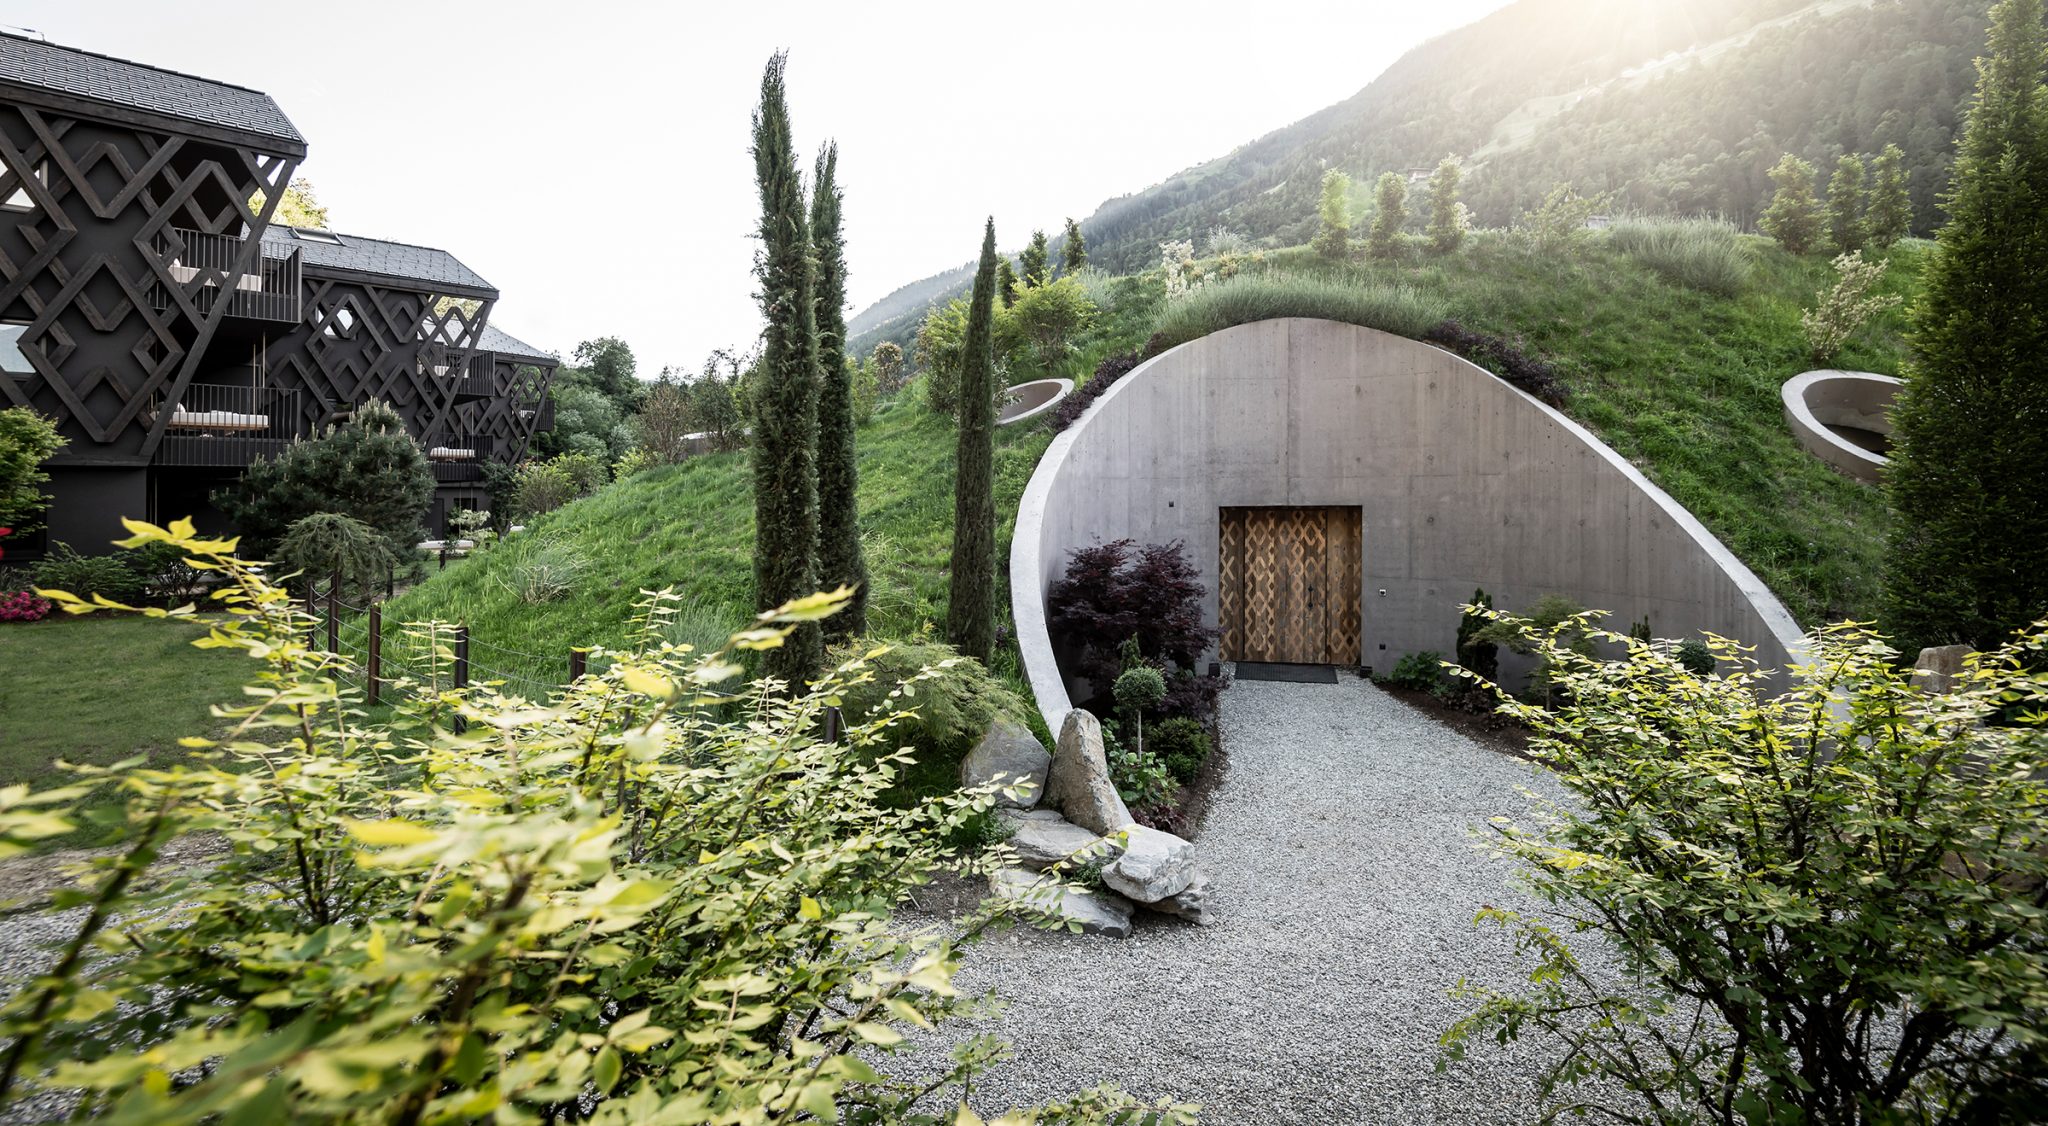 Apfelhotel Torgglerhof, Saltaus, South Tyrol / noa* – network of architecture